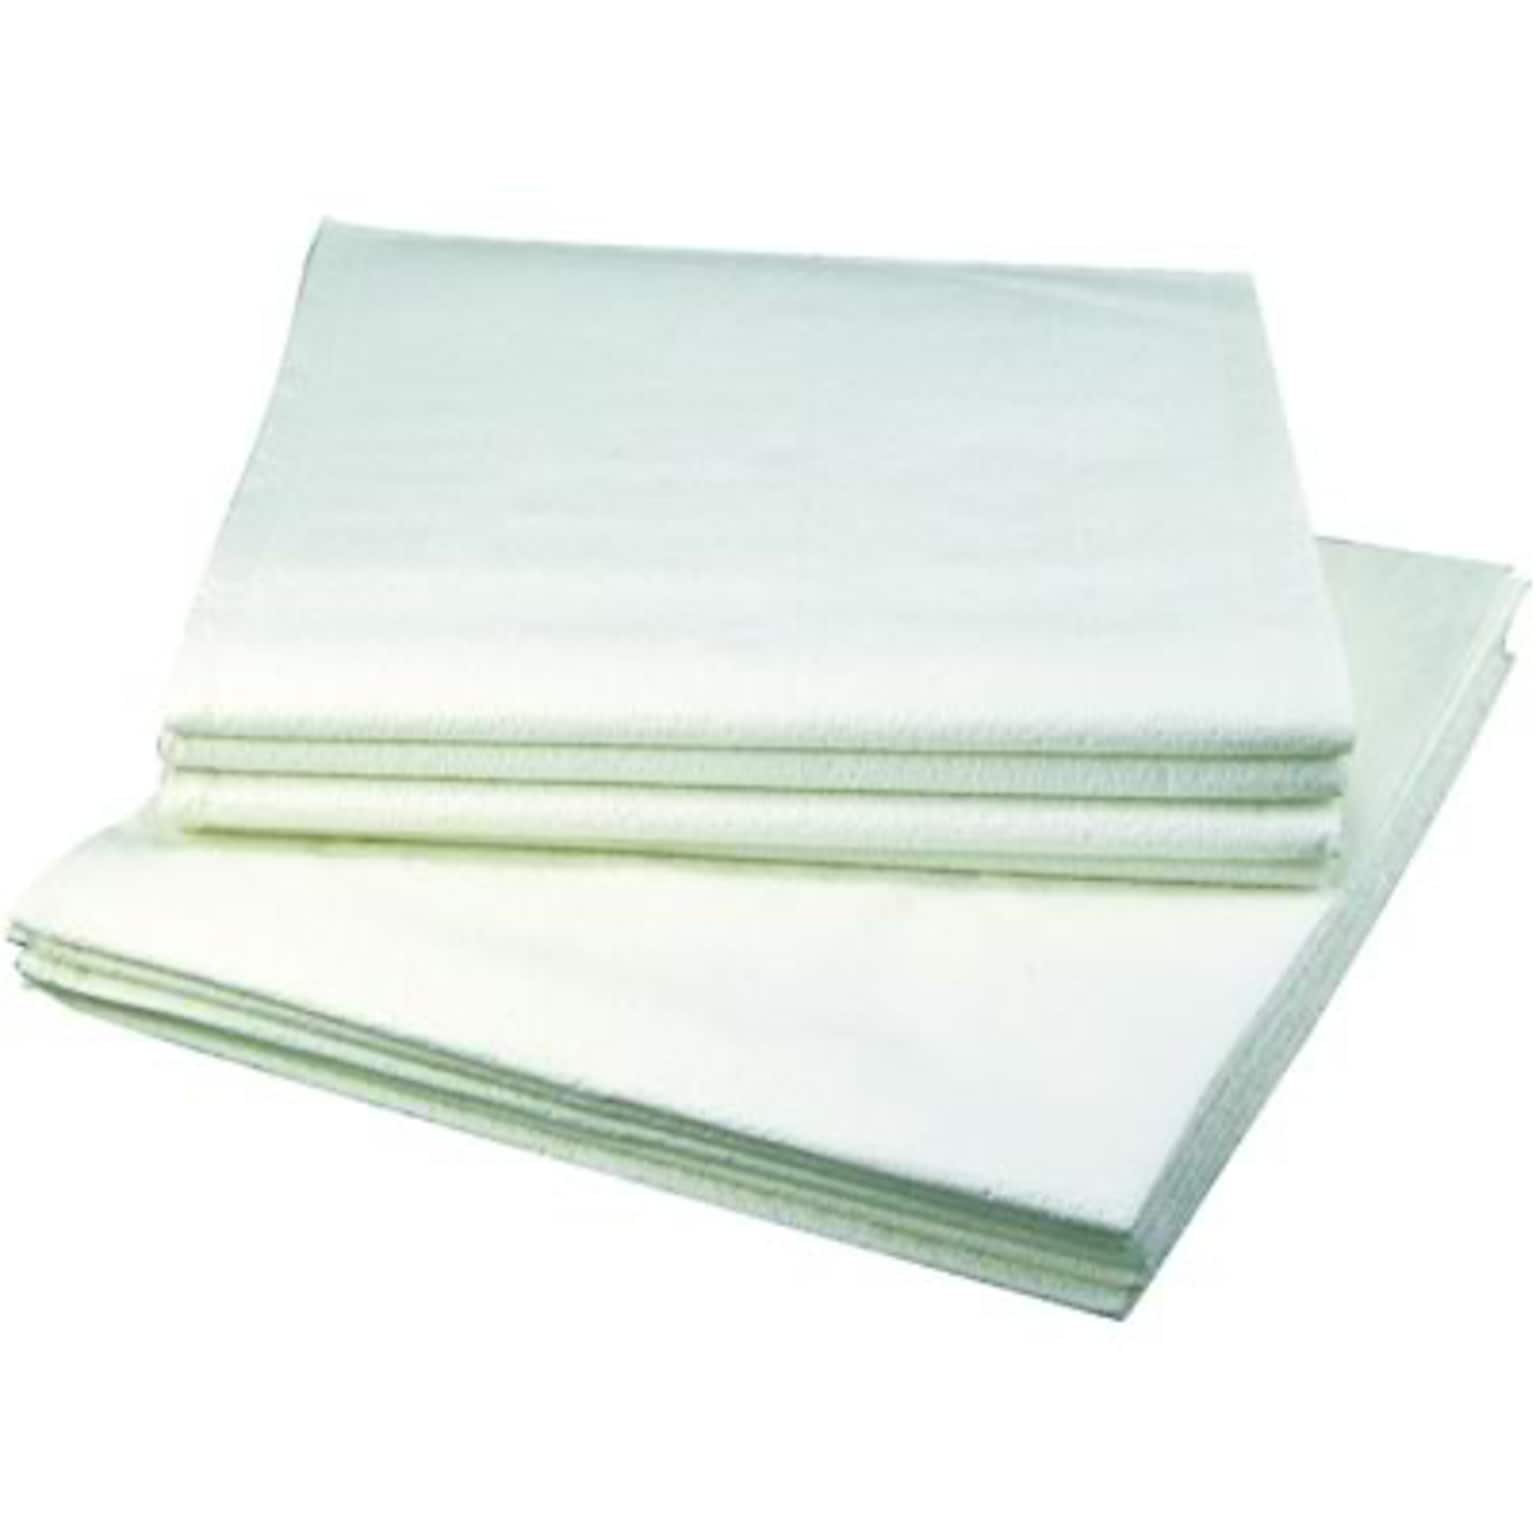 Medical Arts Press Disposable White Drape Sheets, 2-Ply Tissue, 40x48, 100/Case